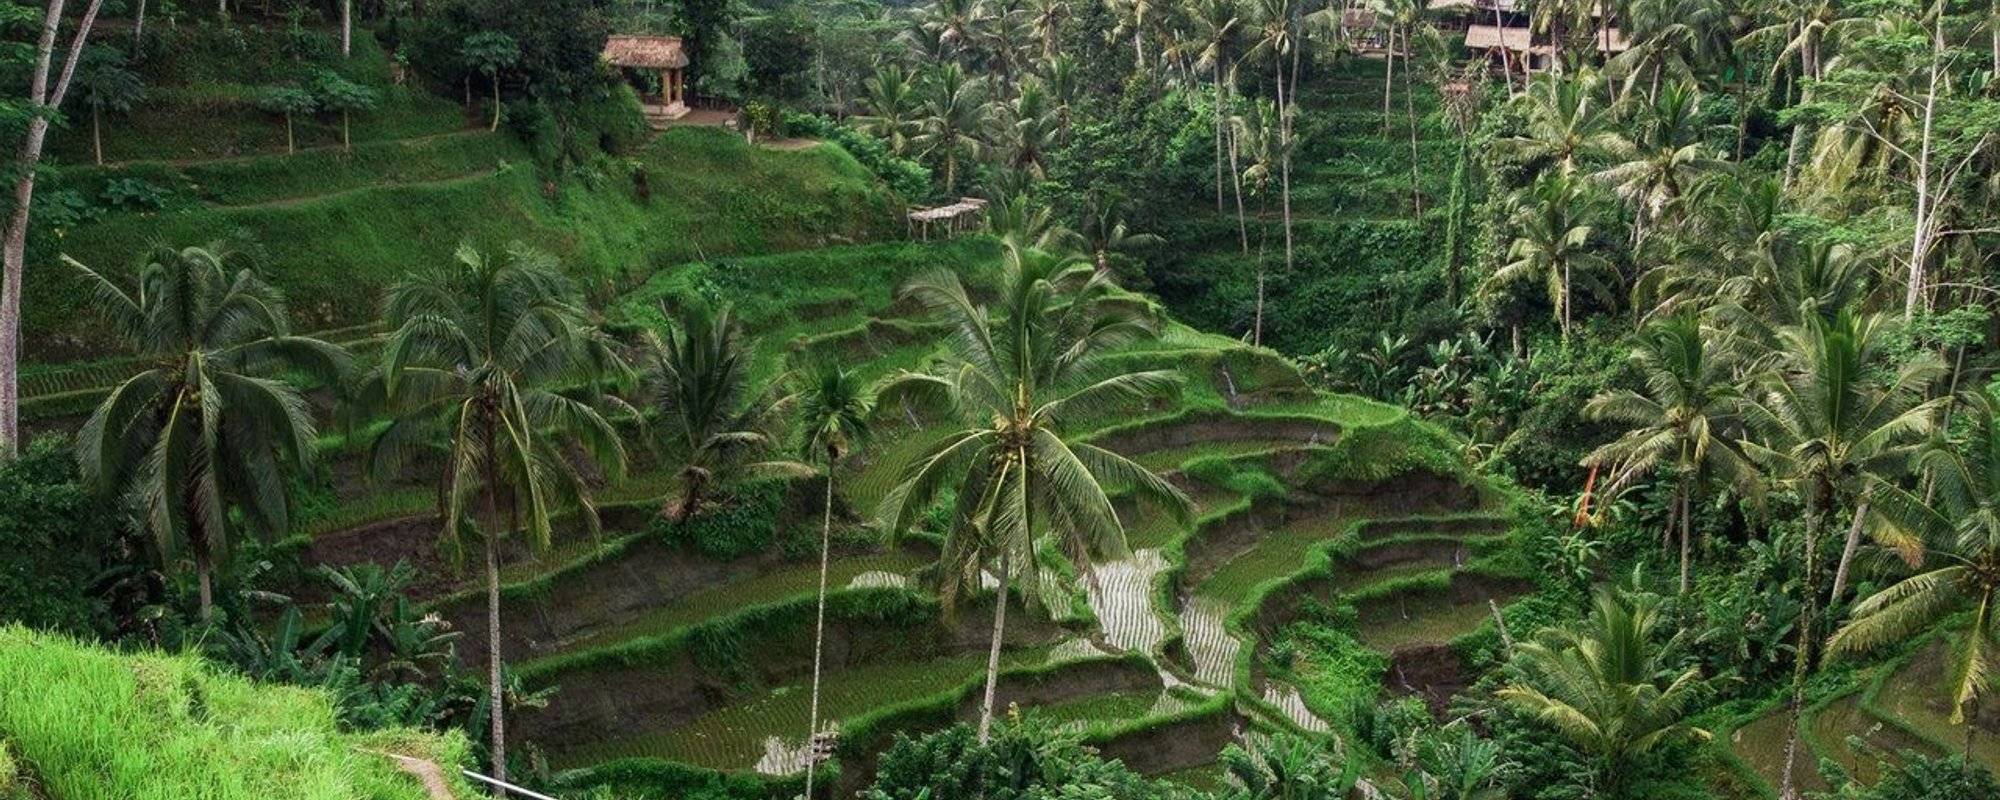 The Tegalalang Rice Terraces - Ubud, Bali